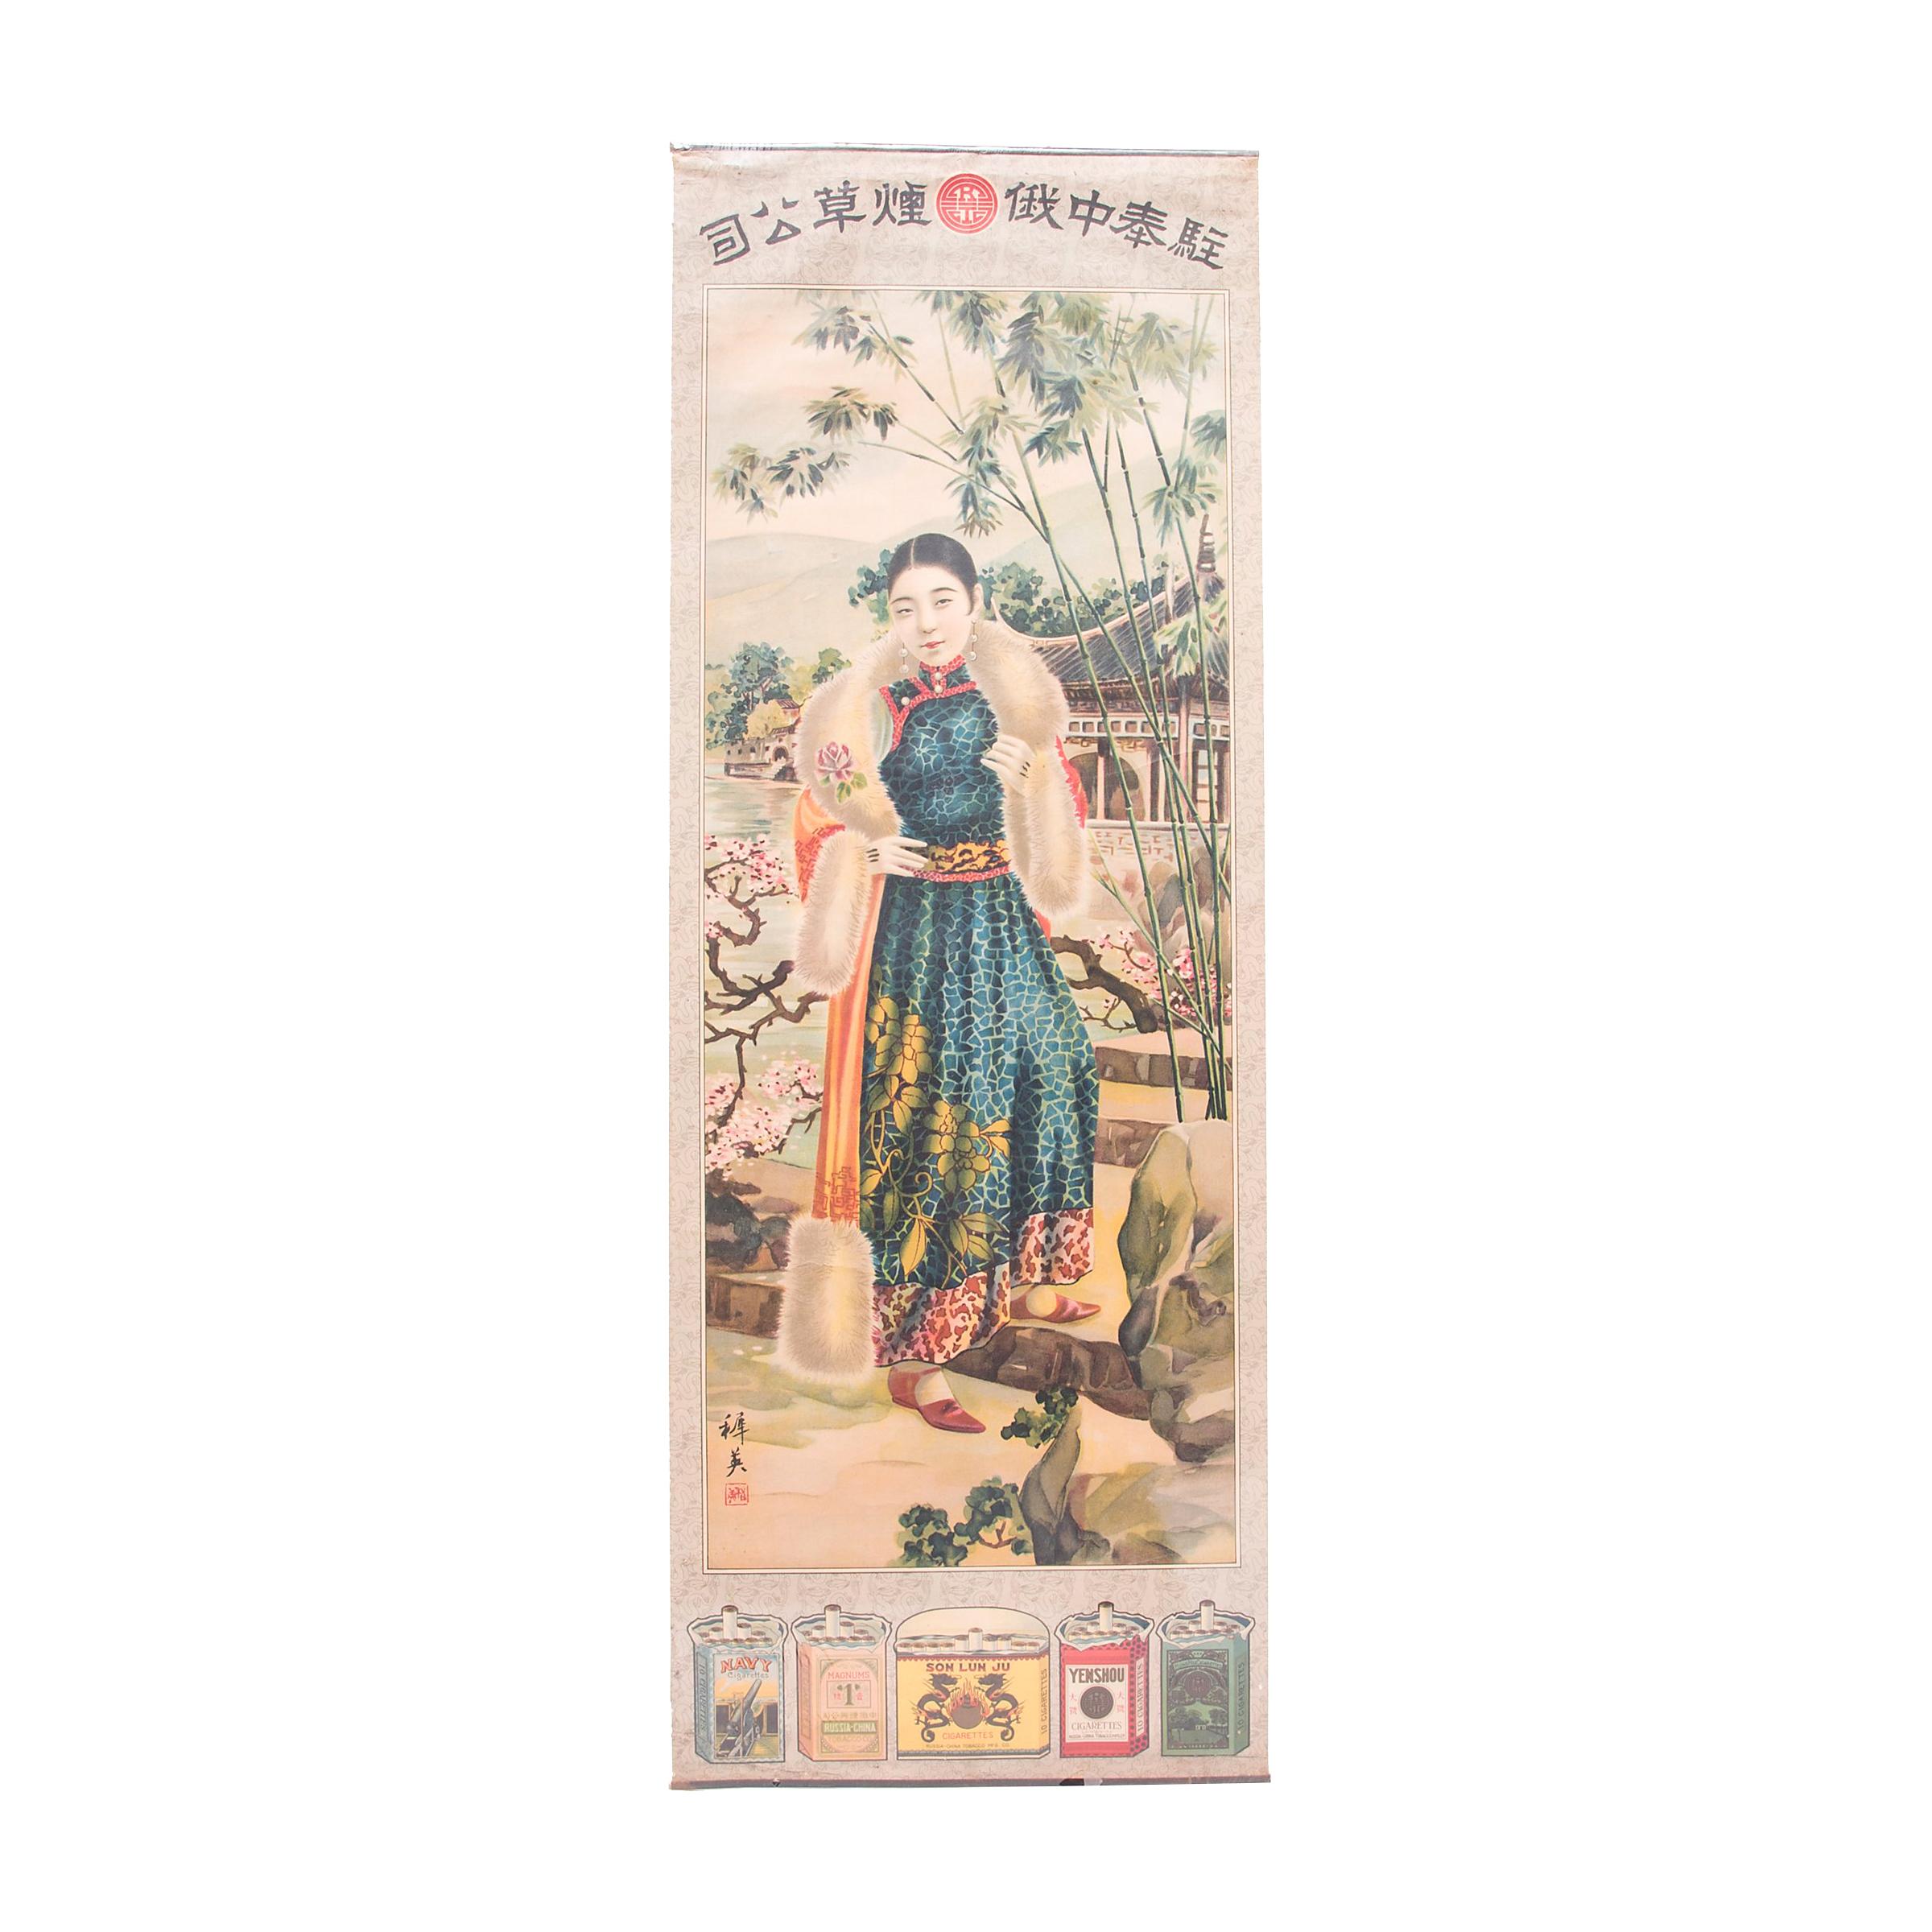 Vintage Chinese Art Deco Cigarette Advertisement Poster